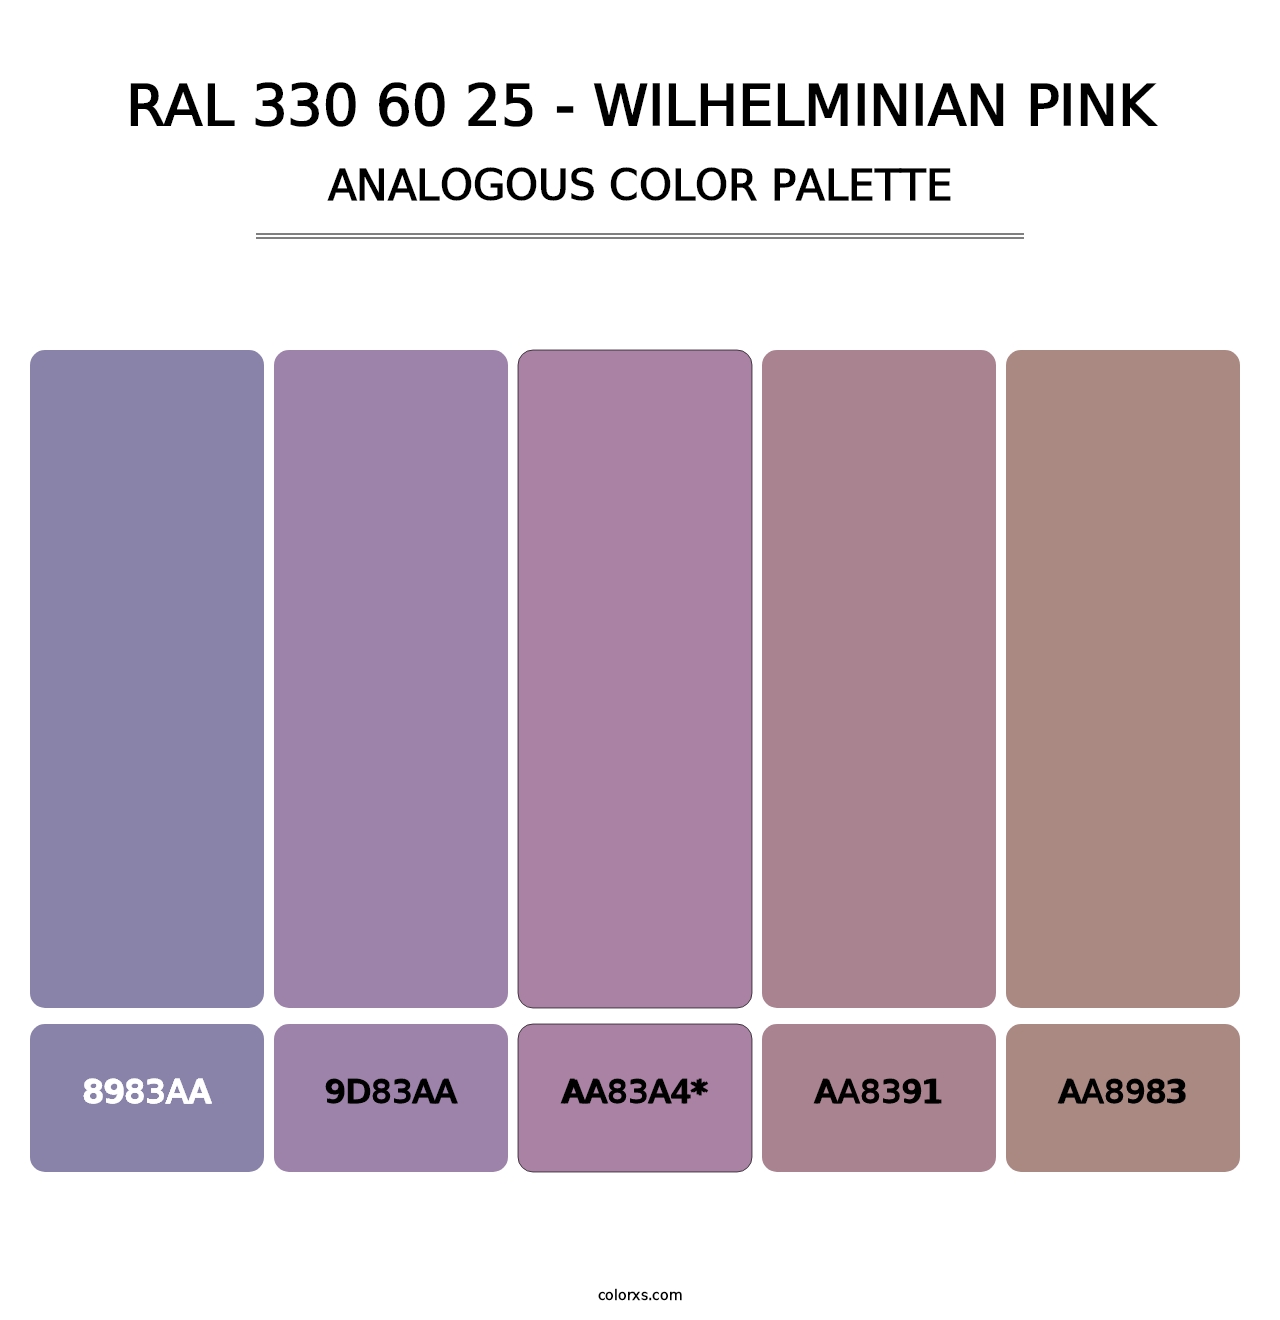 RAL 330 60 25 - Wilhelminian Pink - Analogous Color Palette